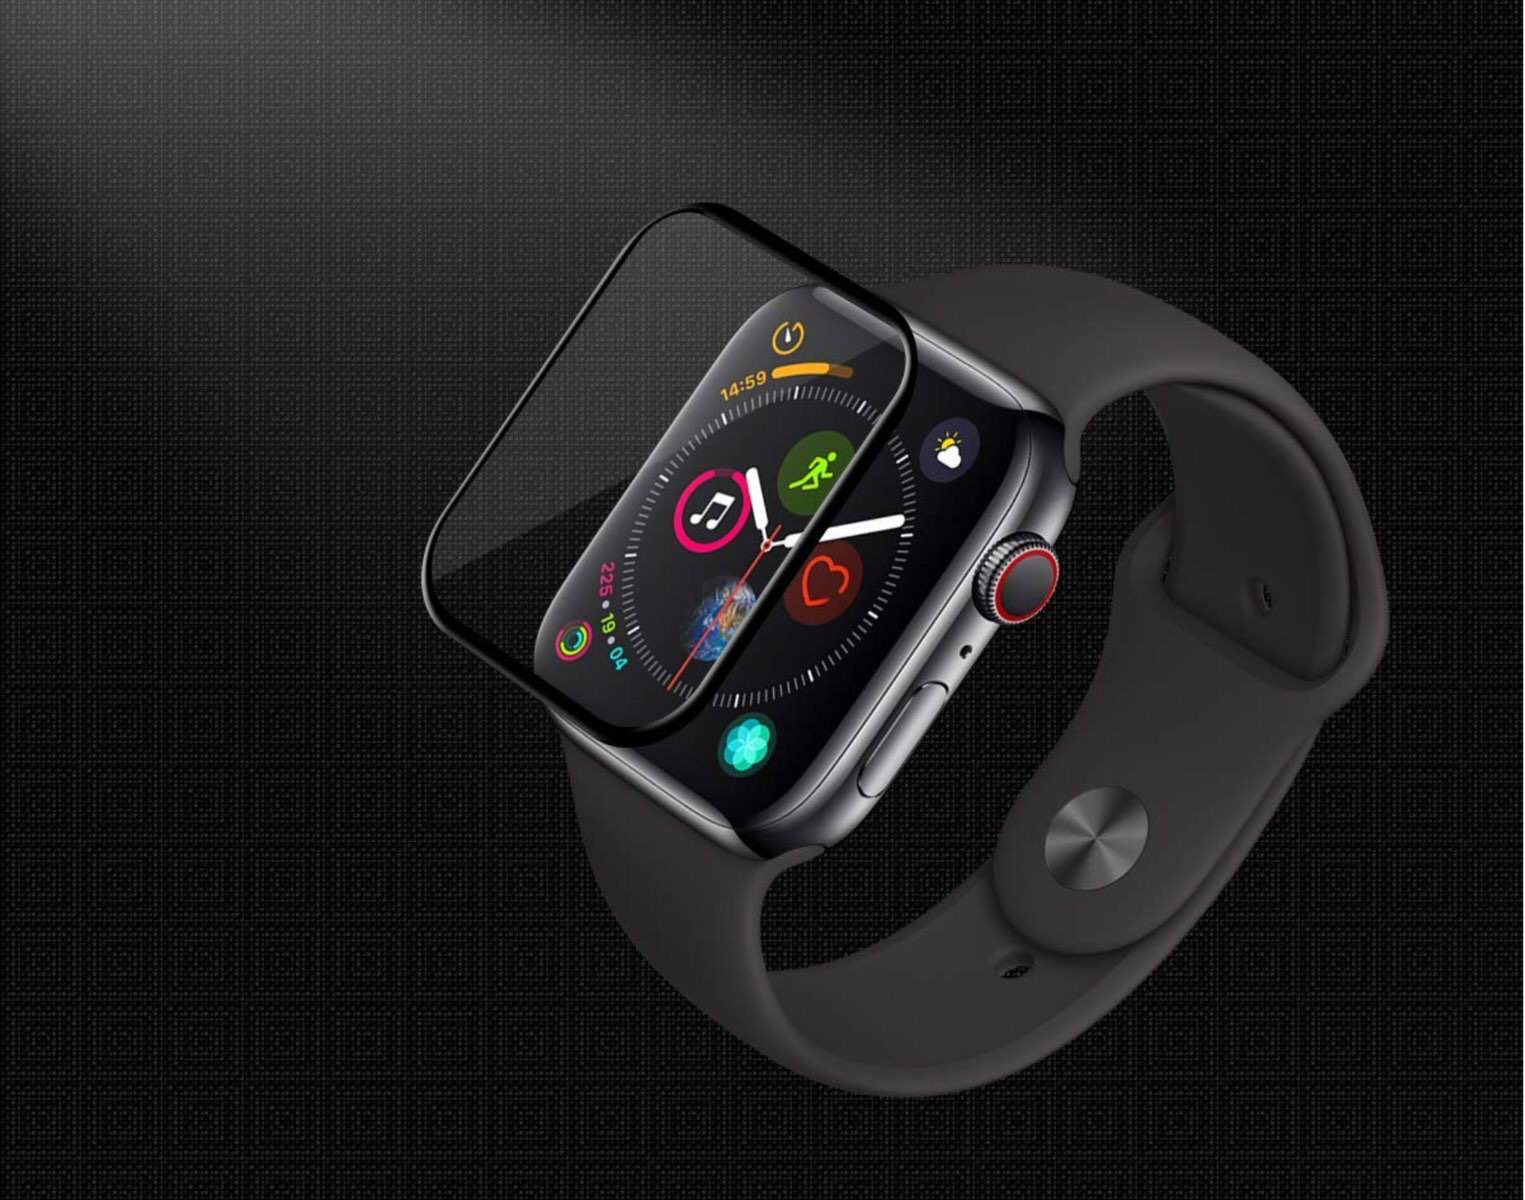 Apple Watch Series 4-1